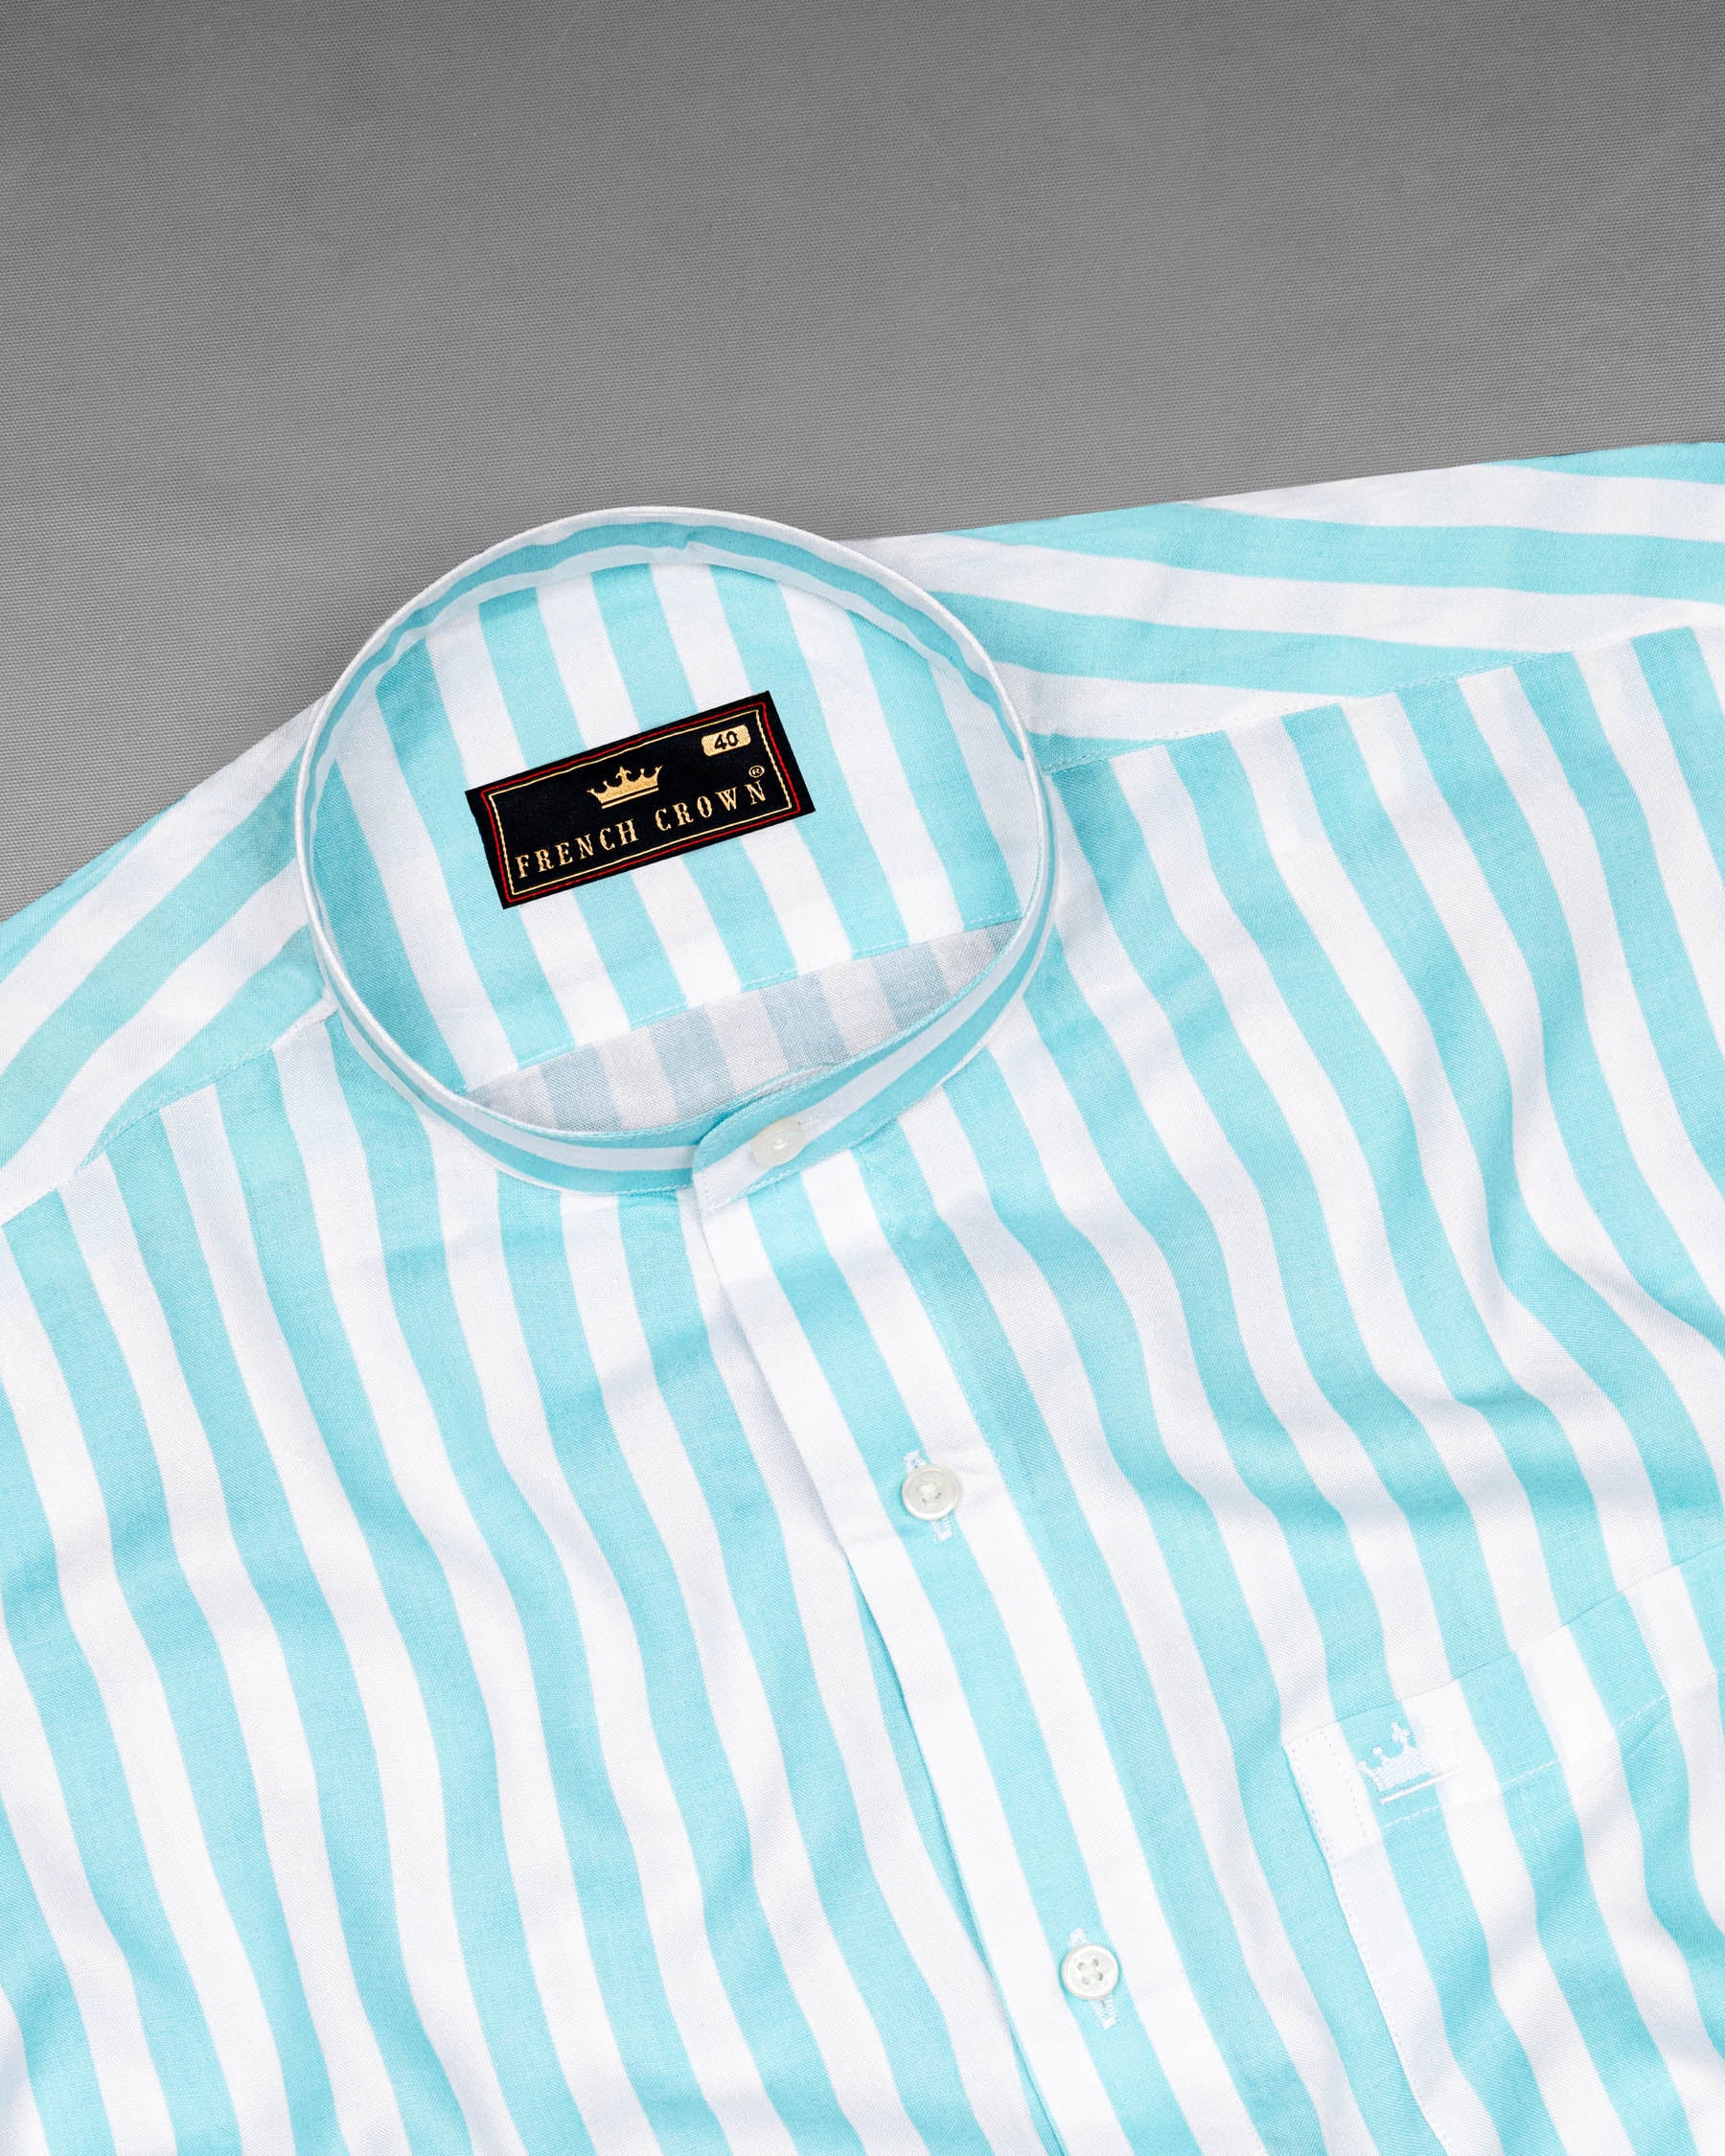 Aqua Blue and White Striped Tencel Shirt